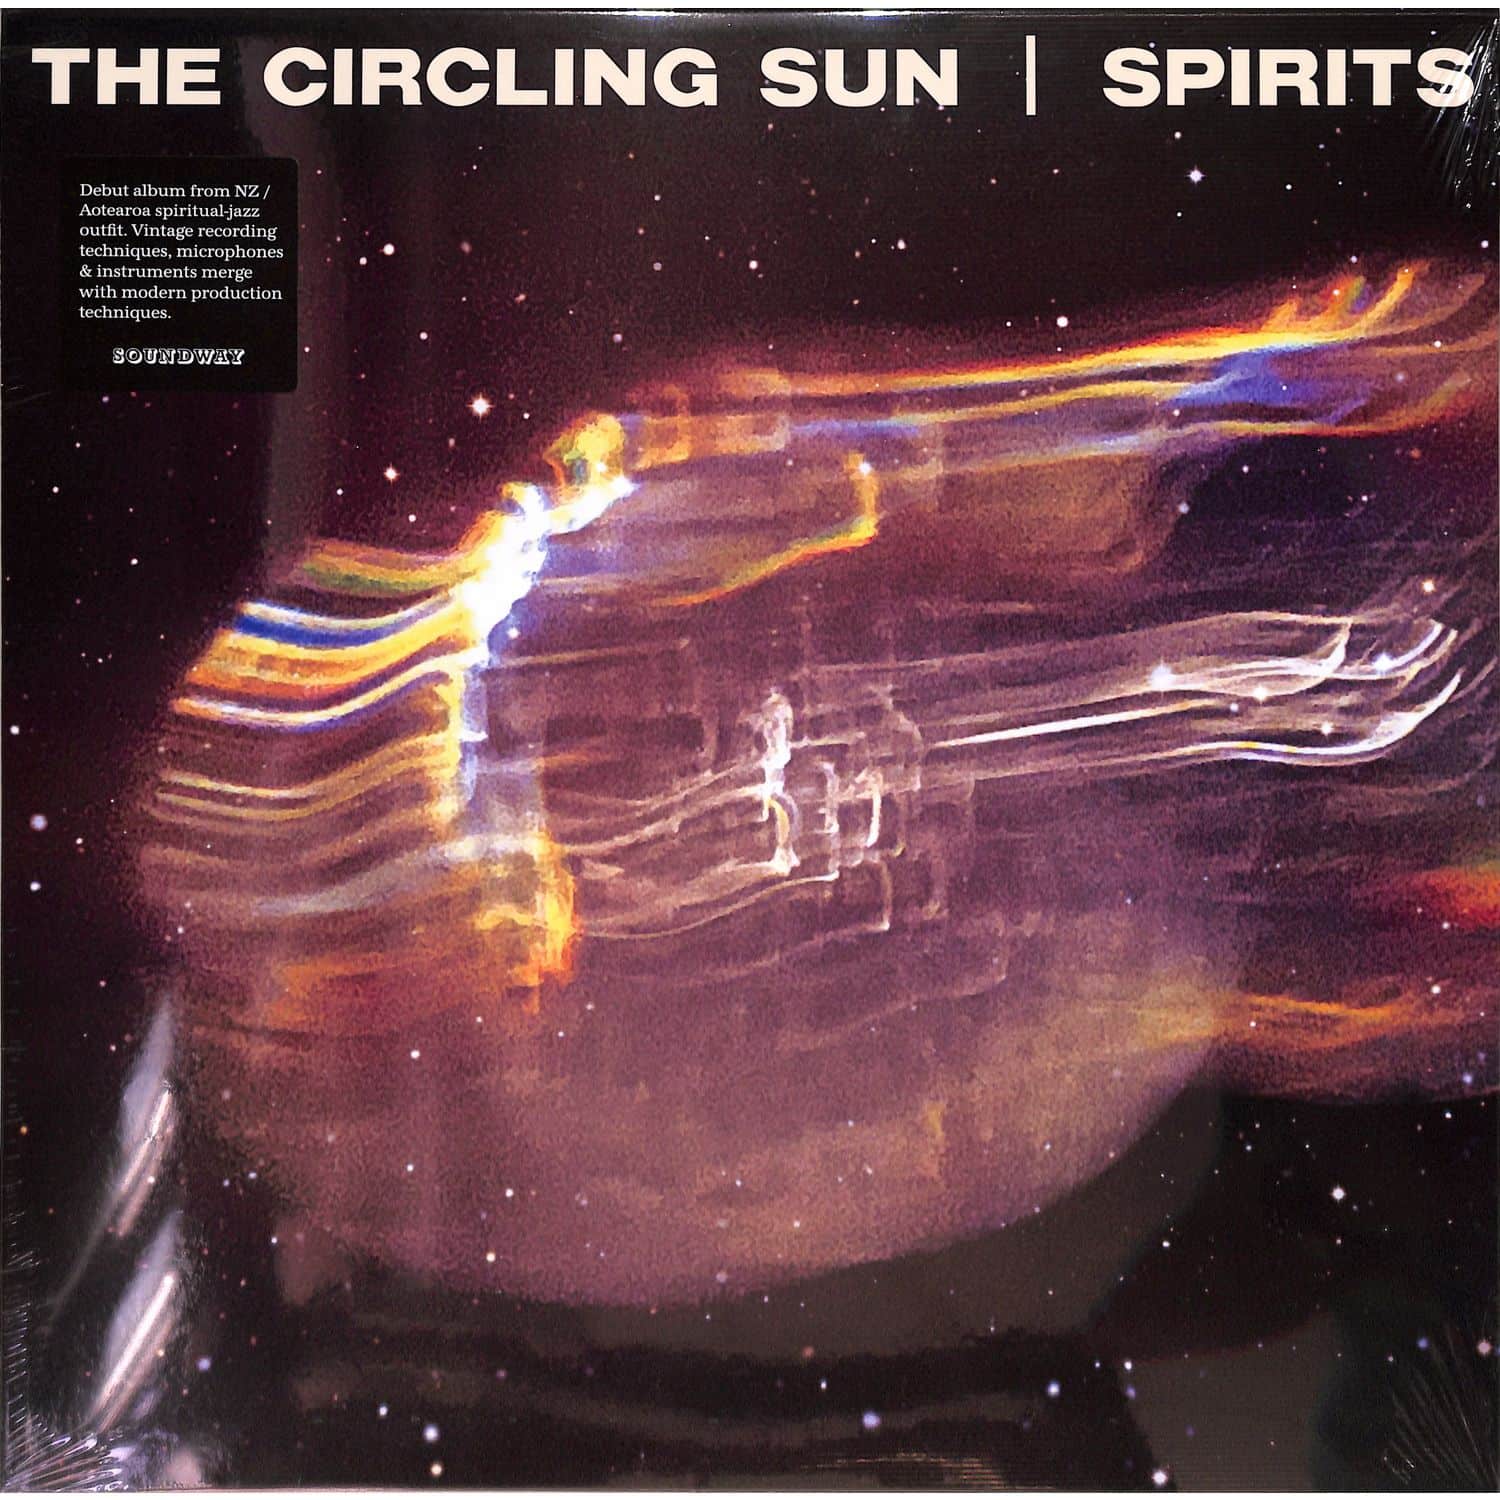 The Circling Sun - SPIRITS 